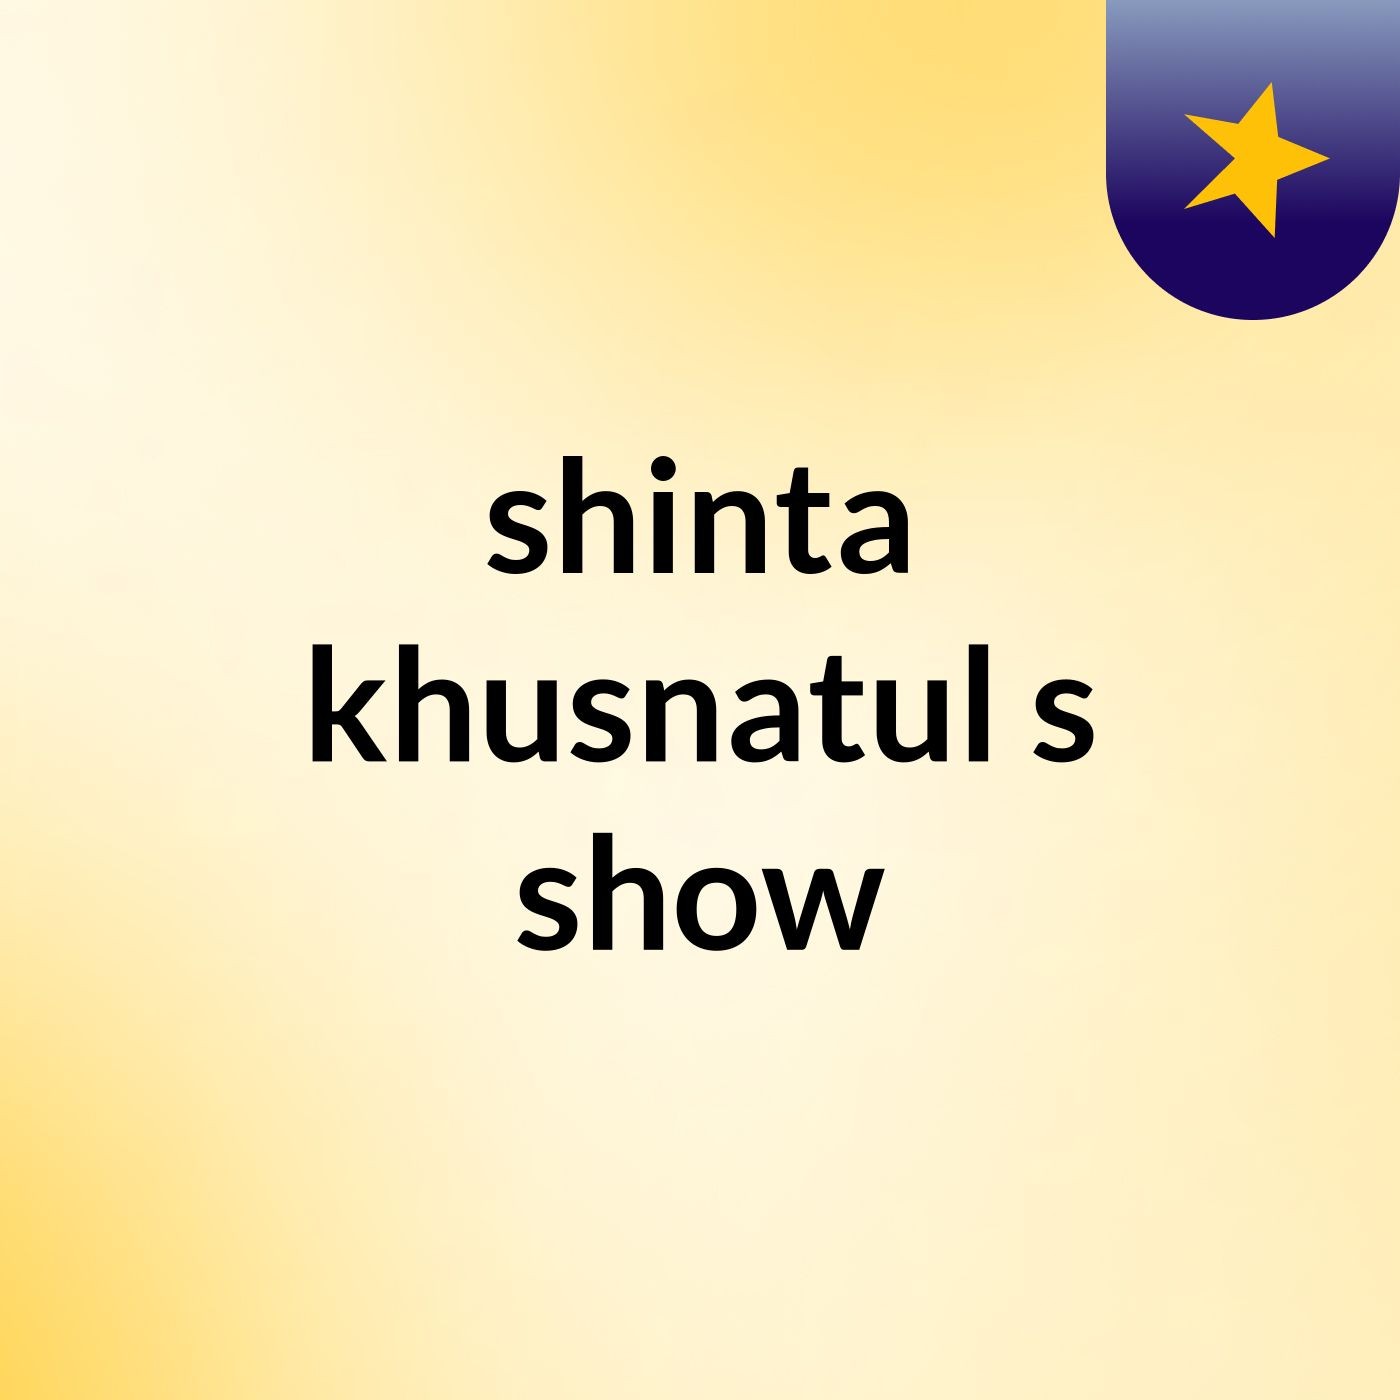 Episode 15 - shinta khusnatul's show